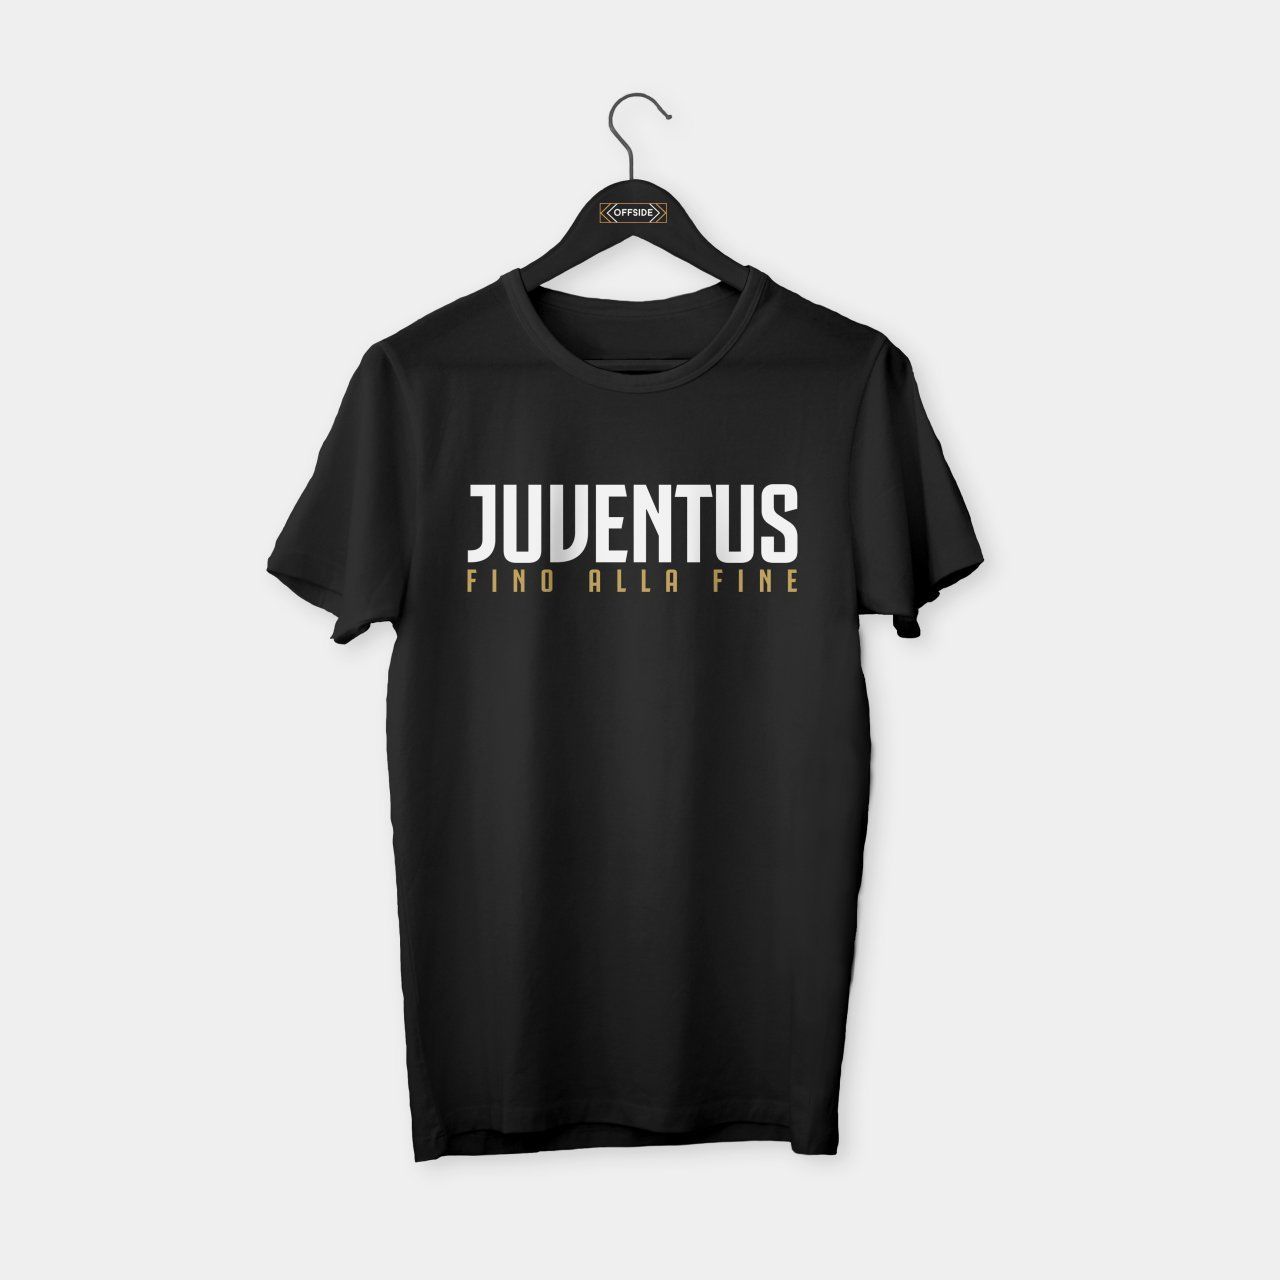 Juventus 'Fino Alla Fine' III T-shirt